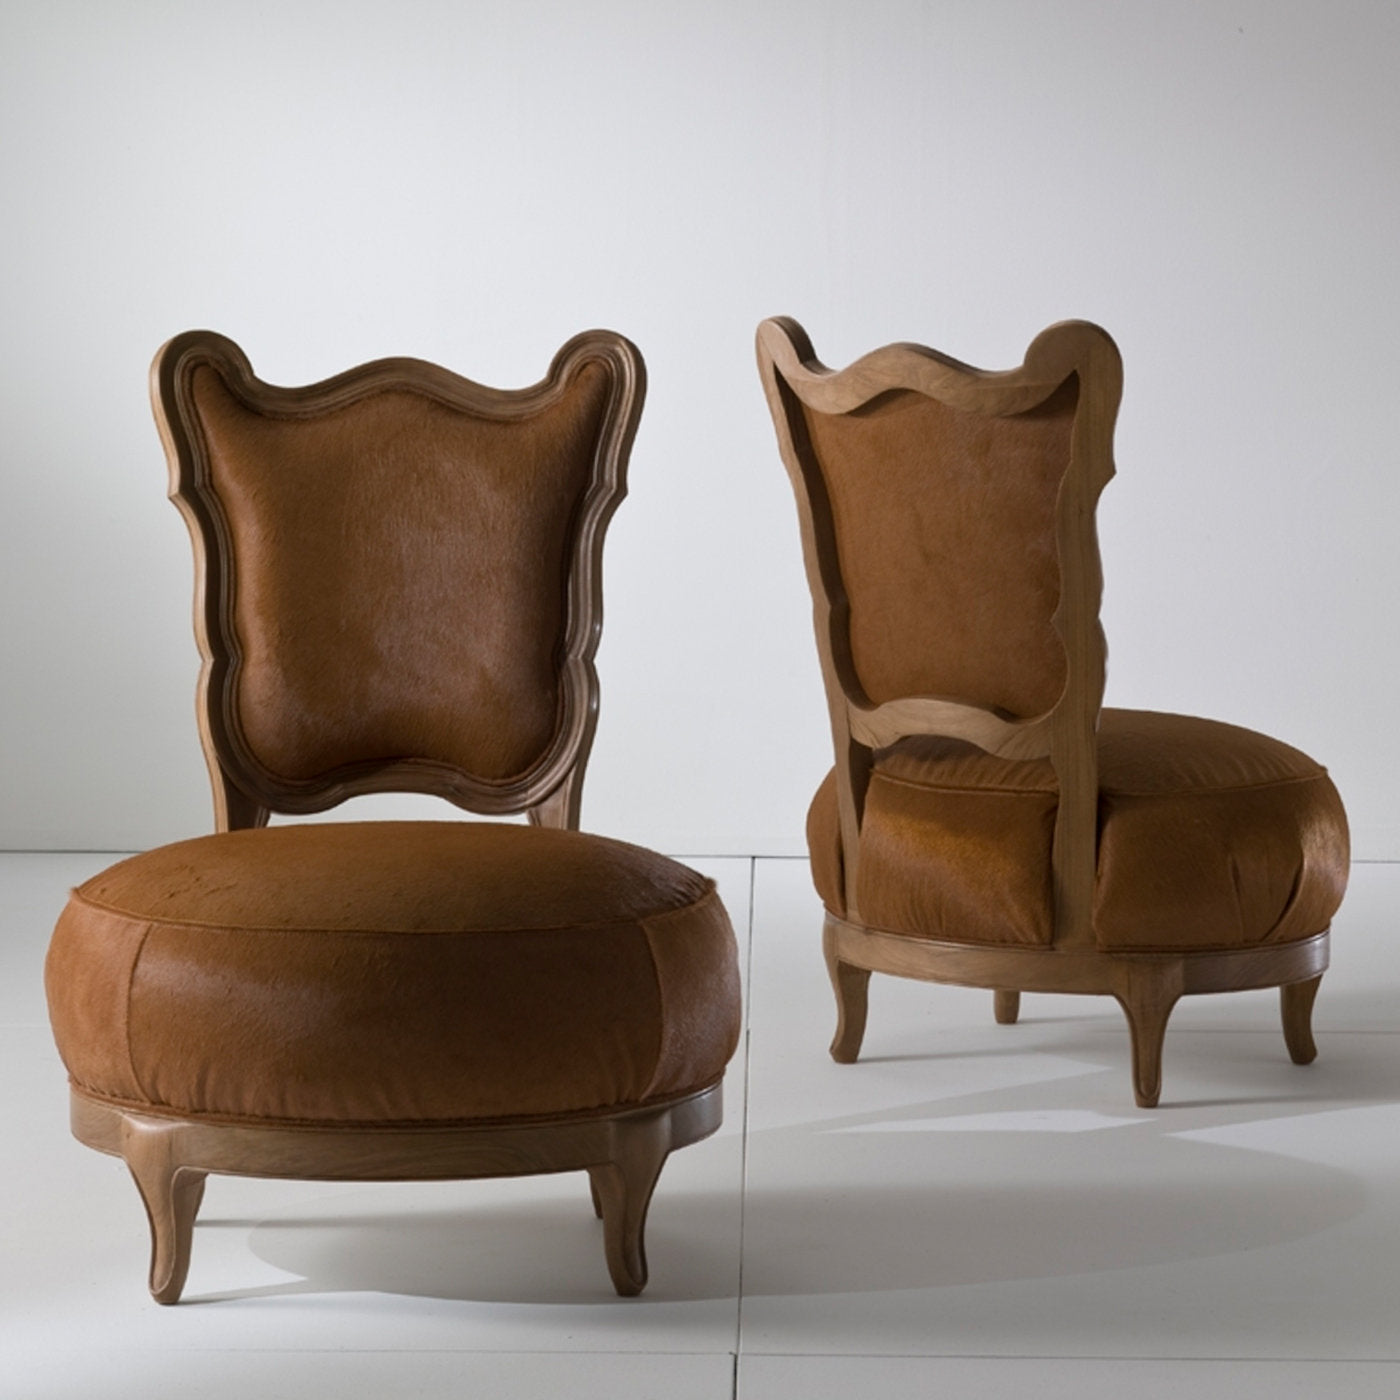 Gattona Chair by Nigel Coates - Alternative view 1